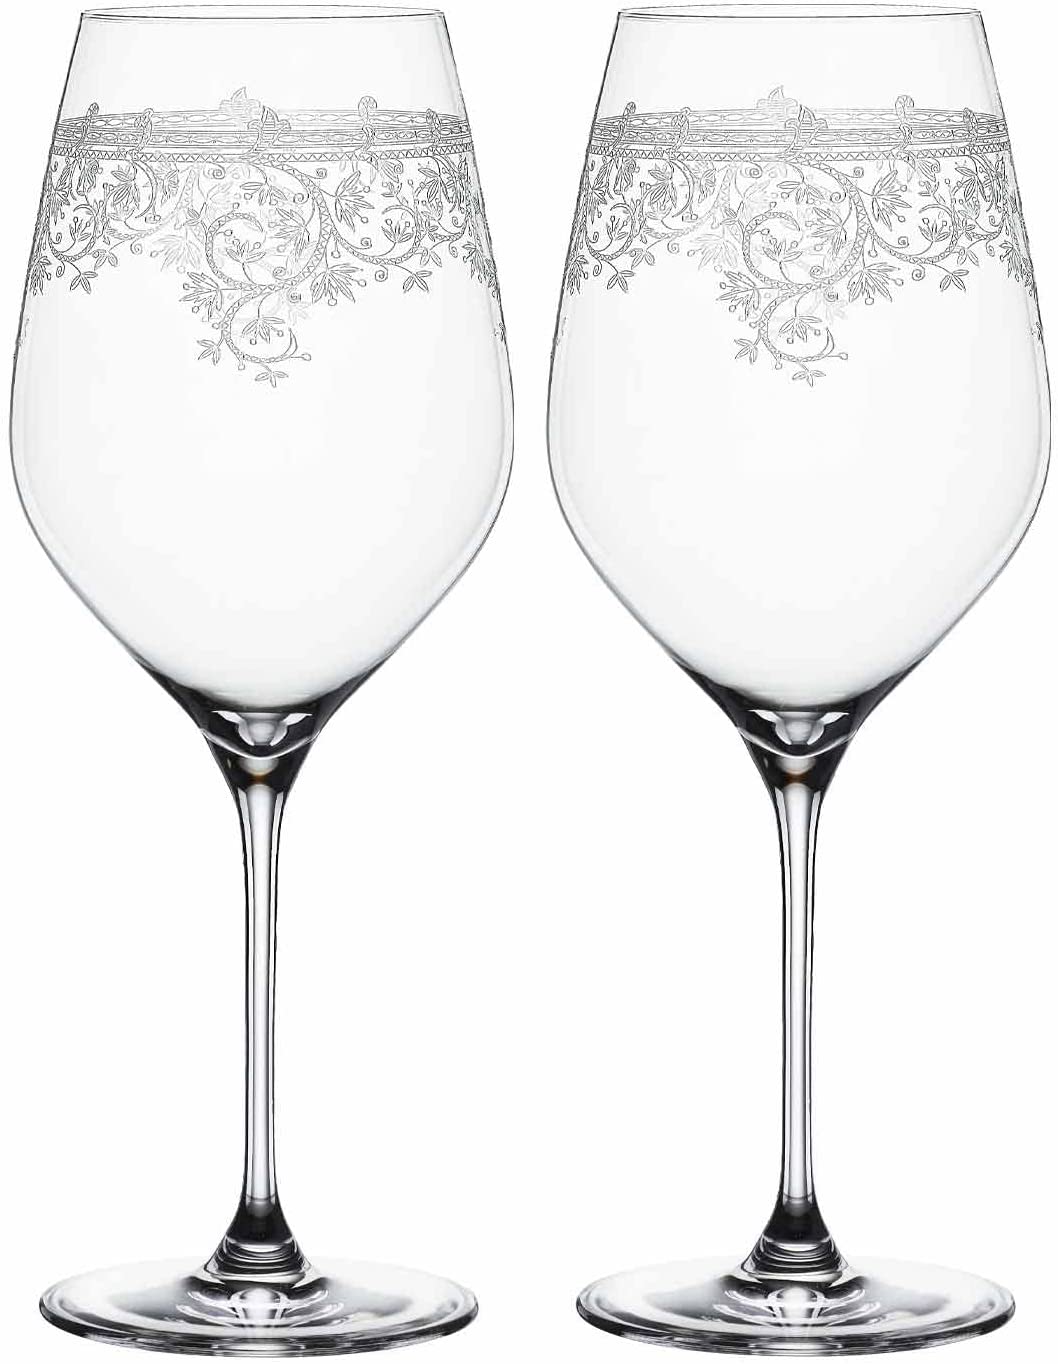 Spiegelau & Nachtmann Set of 2 Bordeaux Glasses, Crystal Glass, 810 ml, Spiegelau Arabesque, Red Wine Glasses with Pantograph Ornaments, 4192265